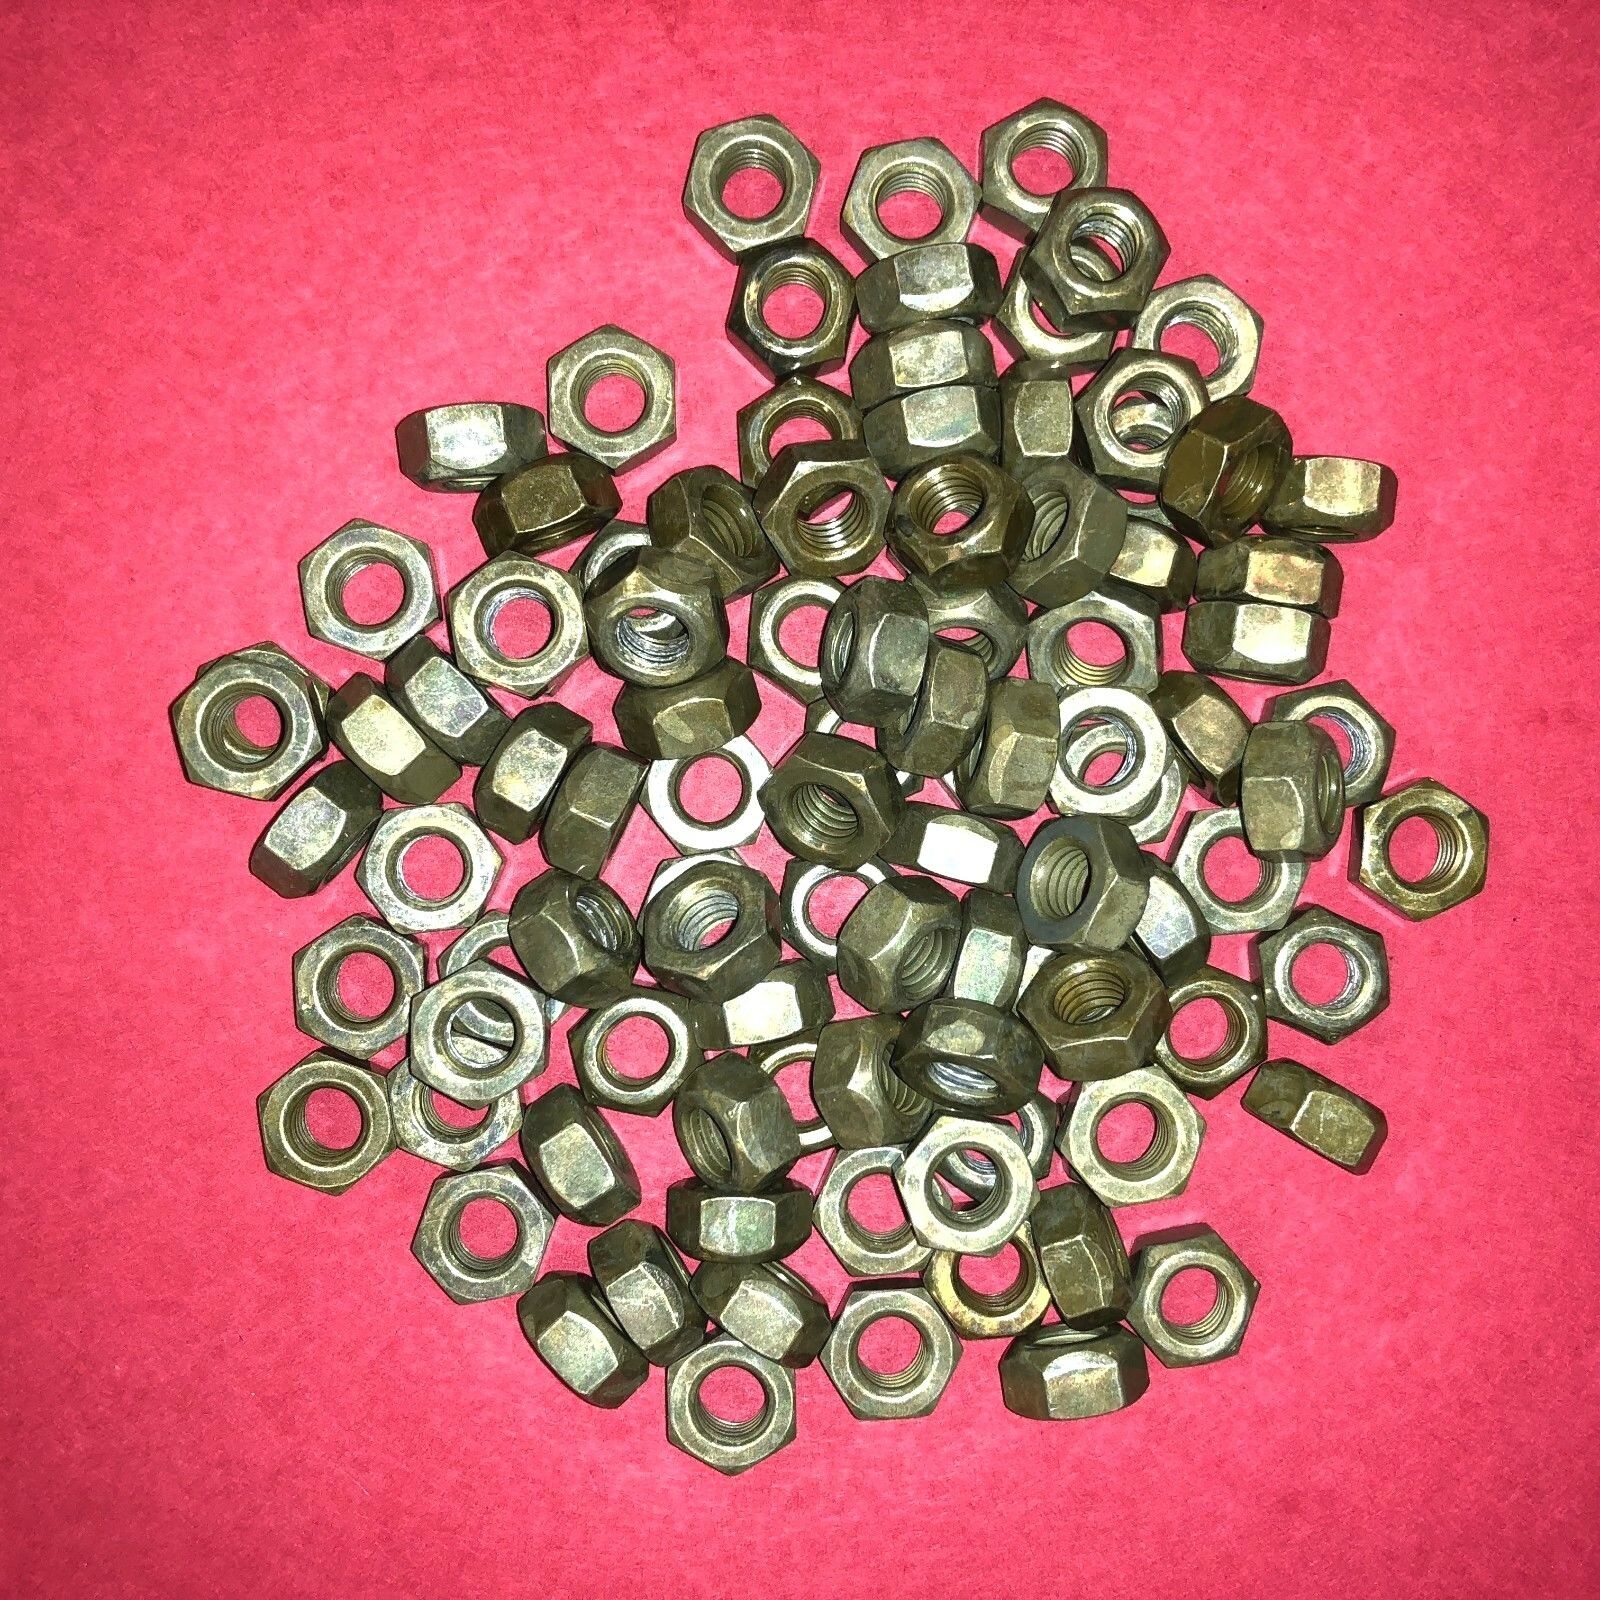 *1000 each* Nuts - M8 x 1.25mm Organic Zinc Plated Prevailing Torque Self-Locking